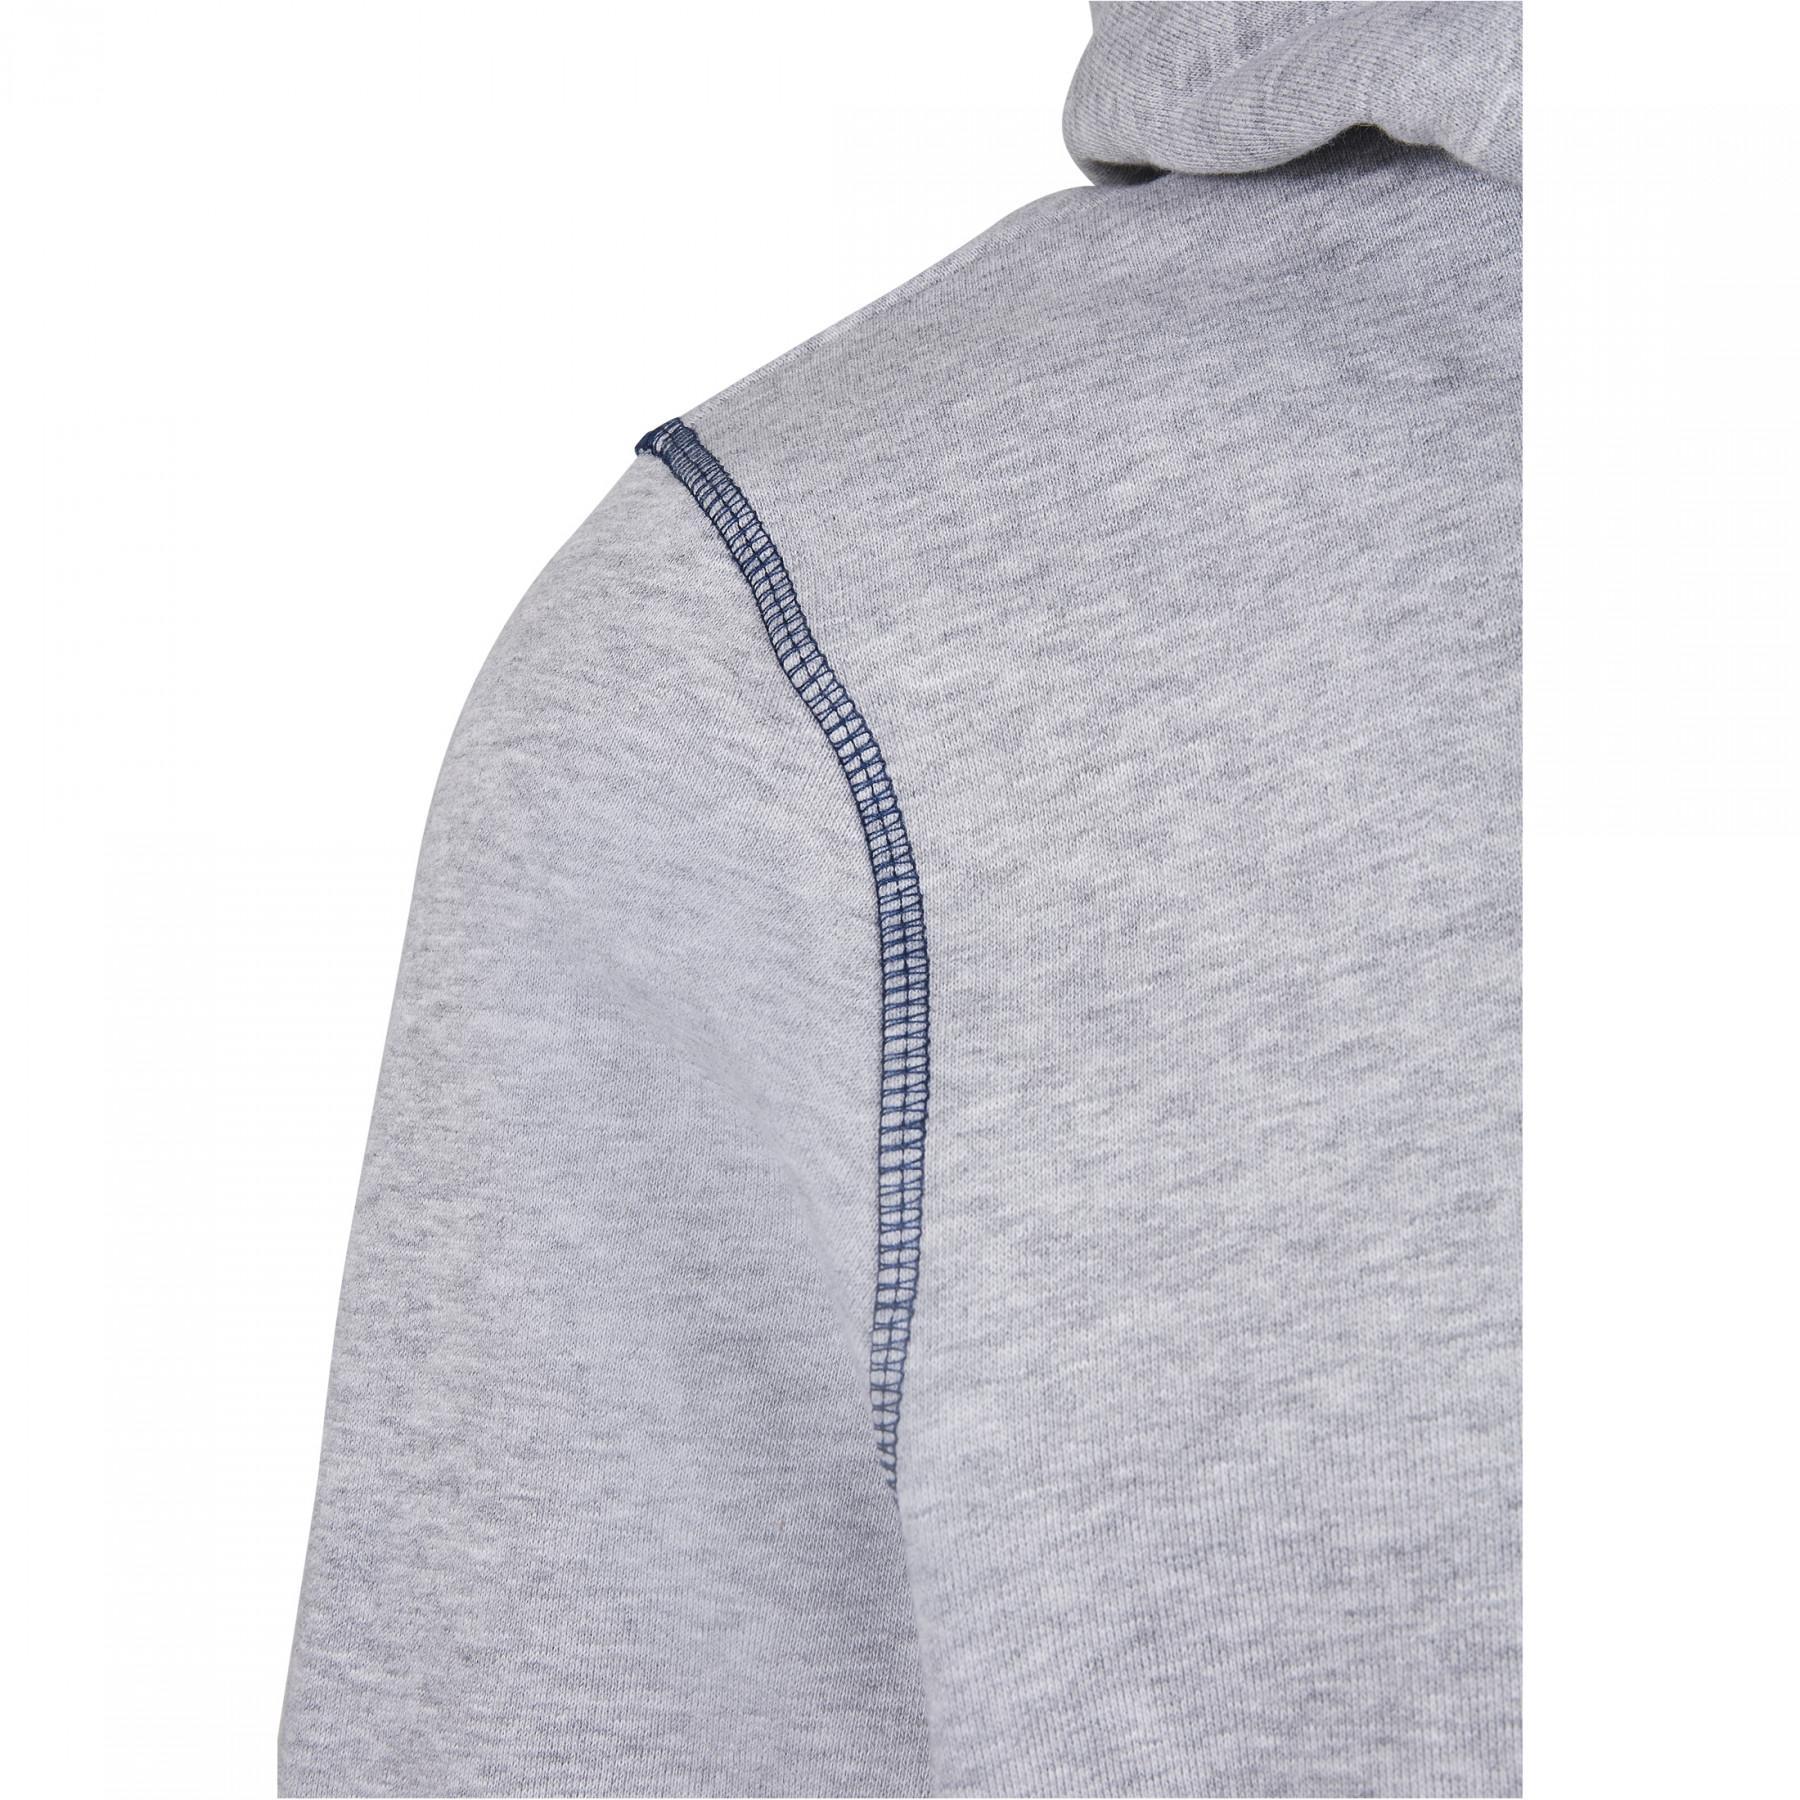 Zip-up sweatshirt Urban Classics organic contrast flatlock